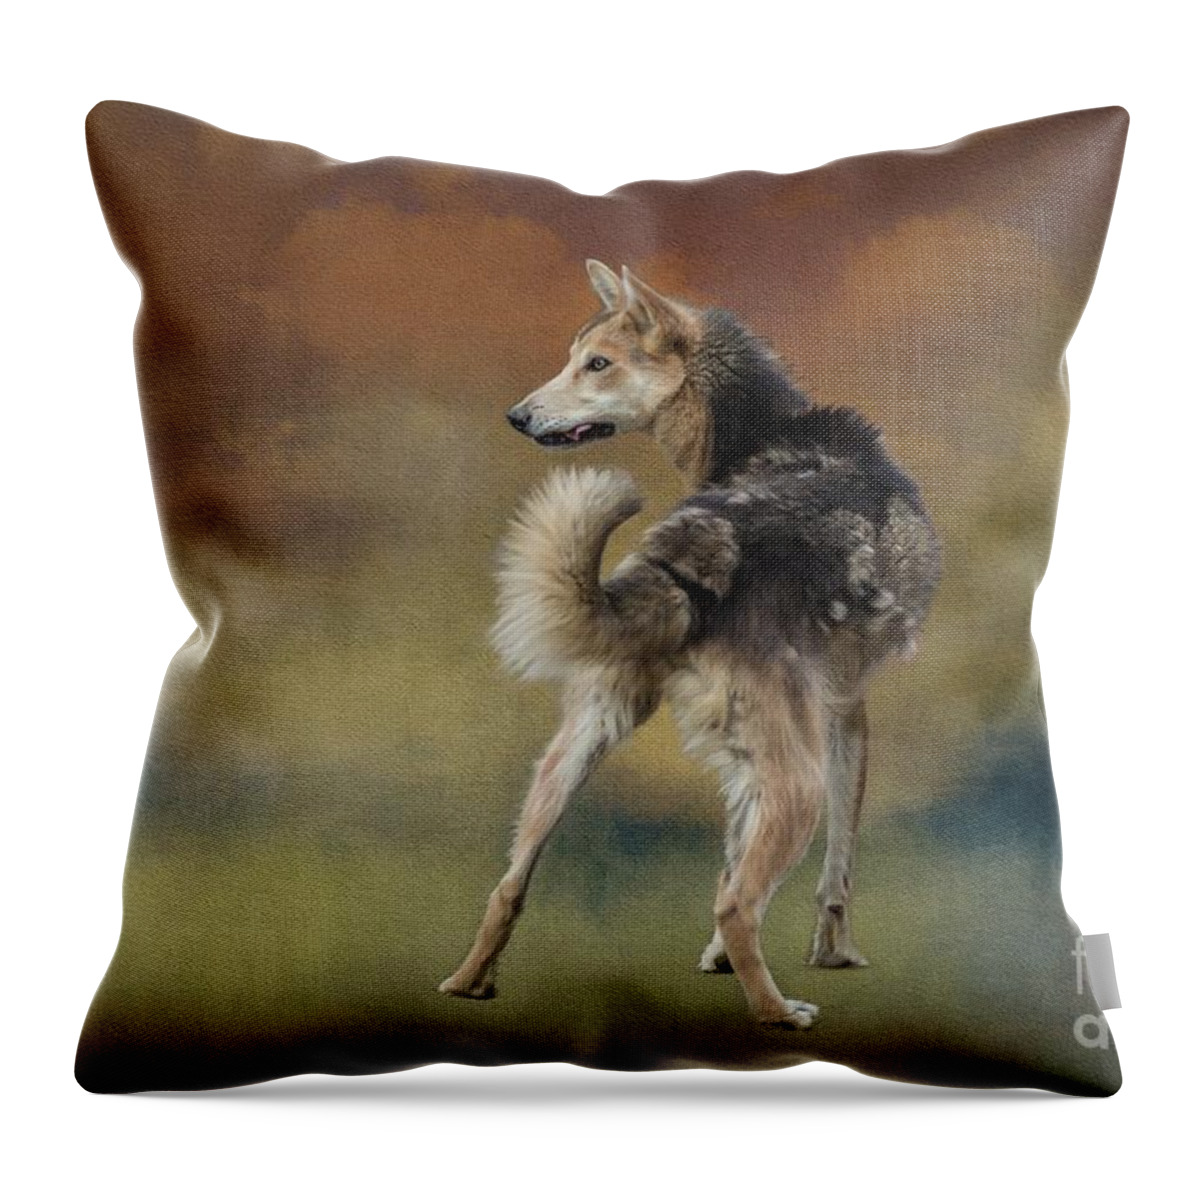 Alaskan Husky Throw Pillow featuring the photograph Alaskan Husky by Eva Lechner